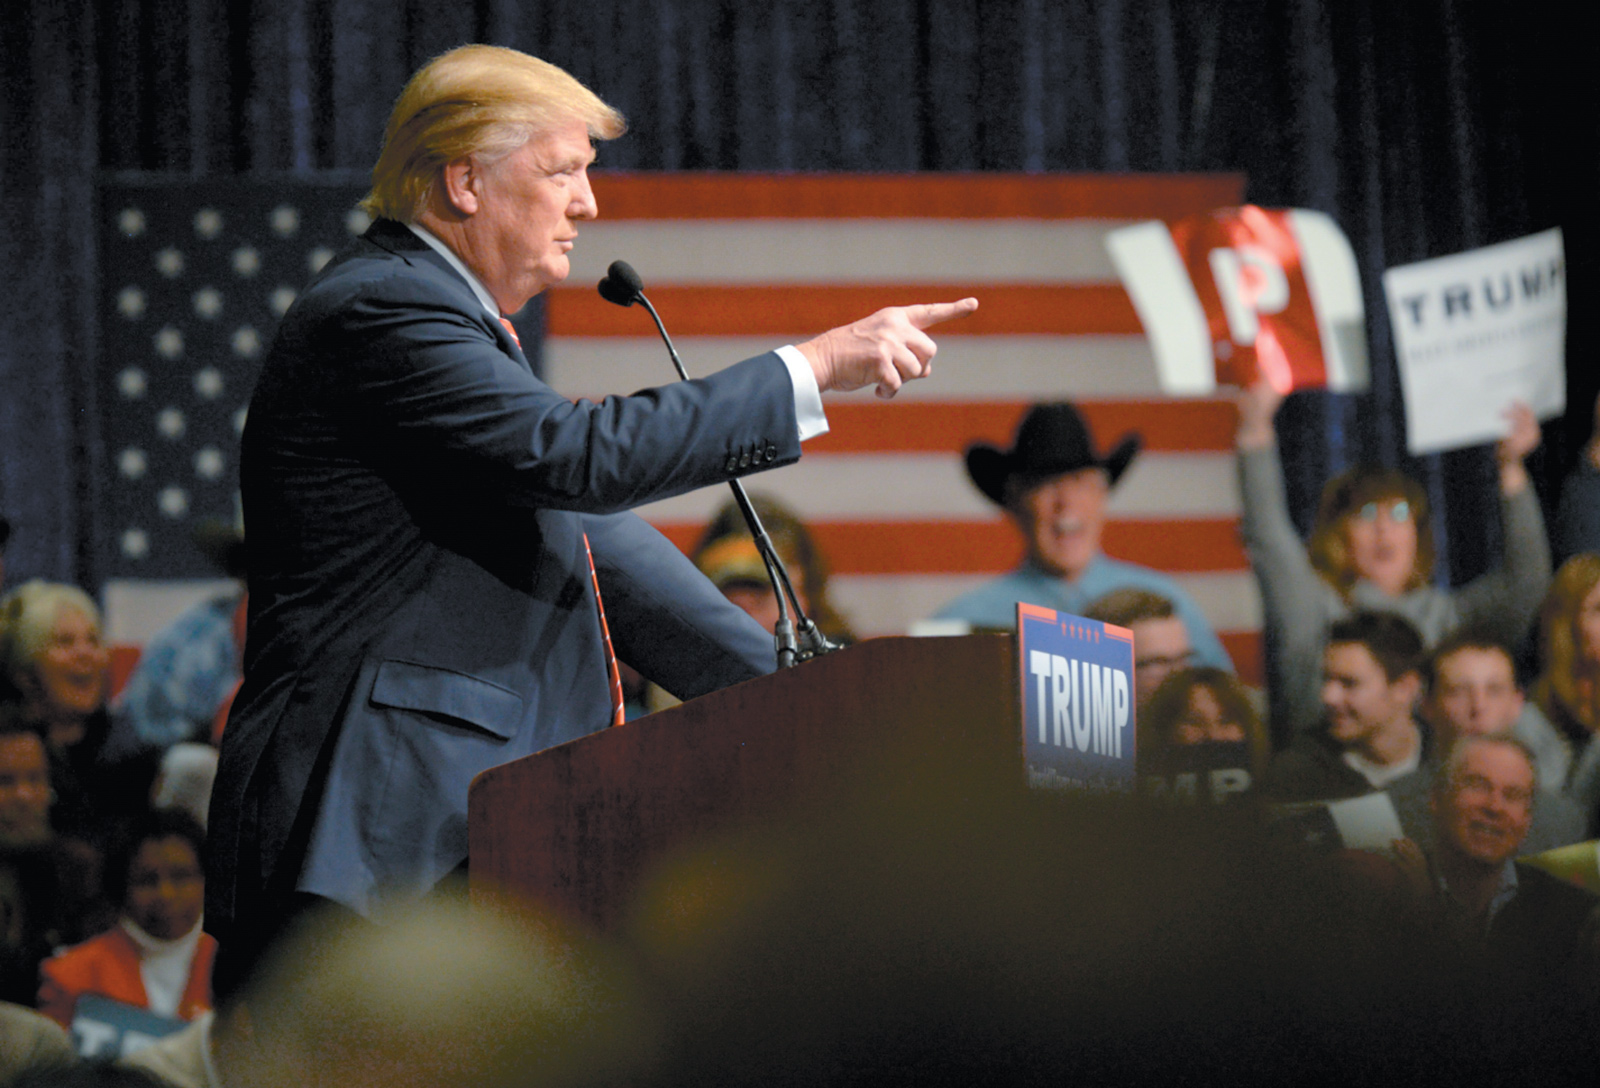 Donald Trump at a campaign rally in Reno, Nevada, January 2016